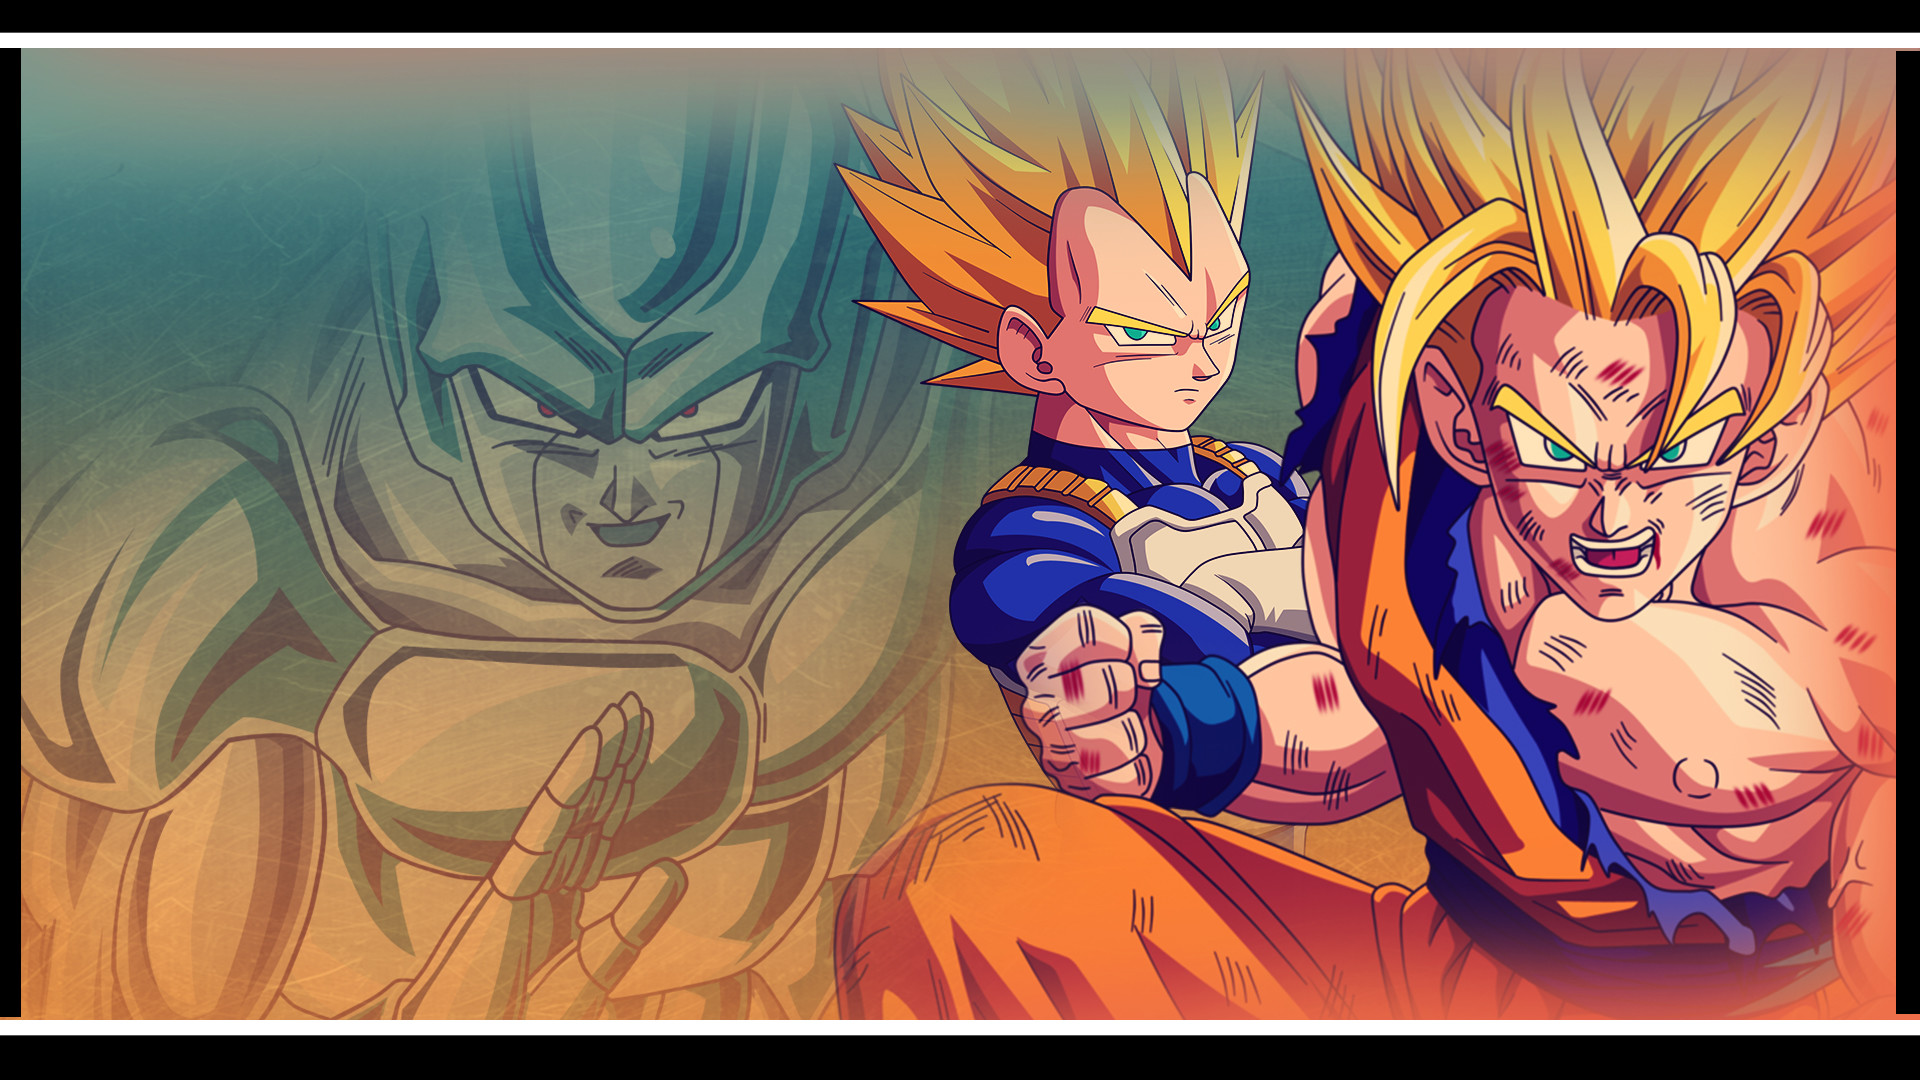 1920x1080 ... Goku and Vegeta vs Metal Cooler - DBZ Wallpaper by Oirigns